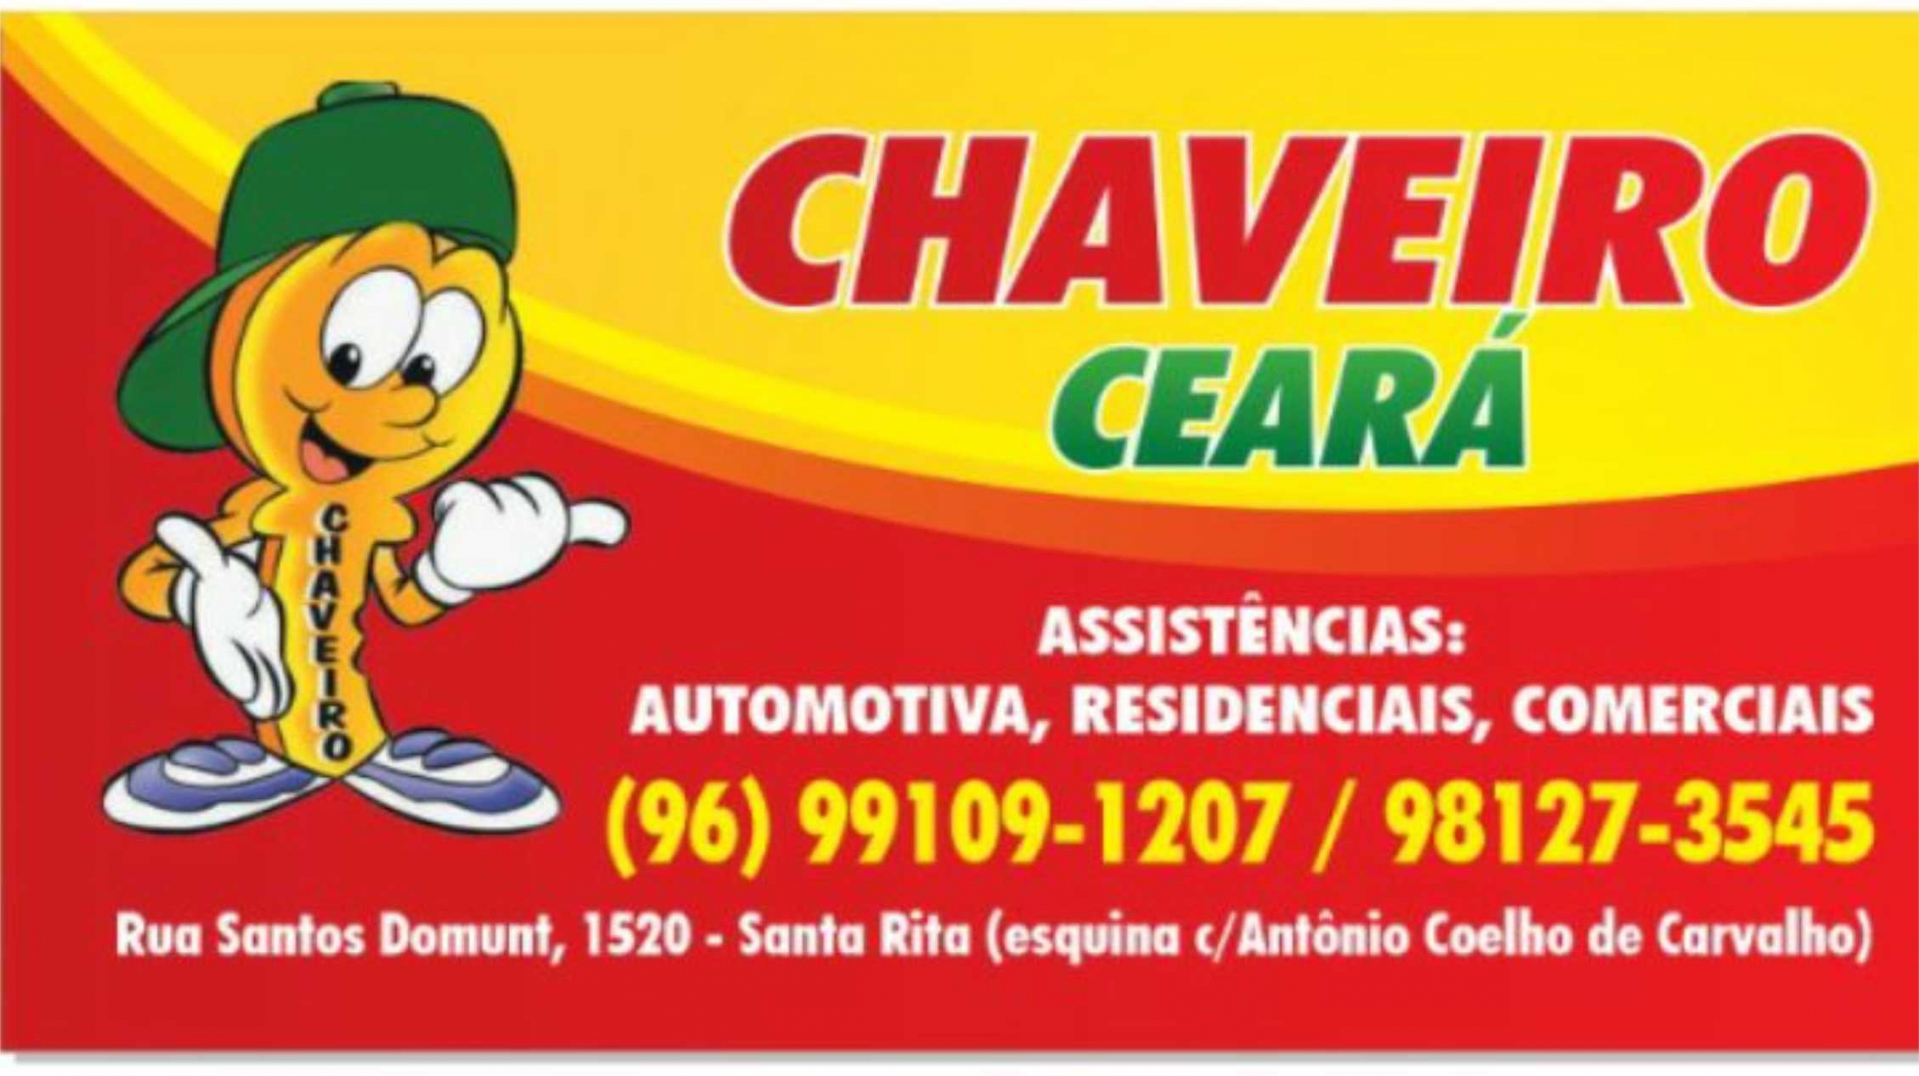 CHAVEIRO CEARÁ aaa